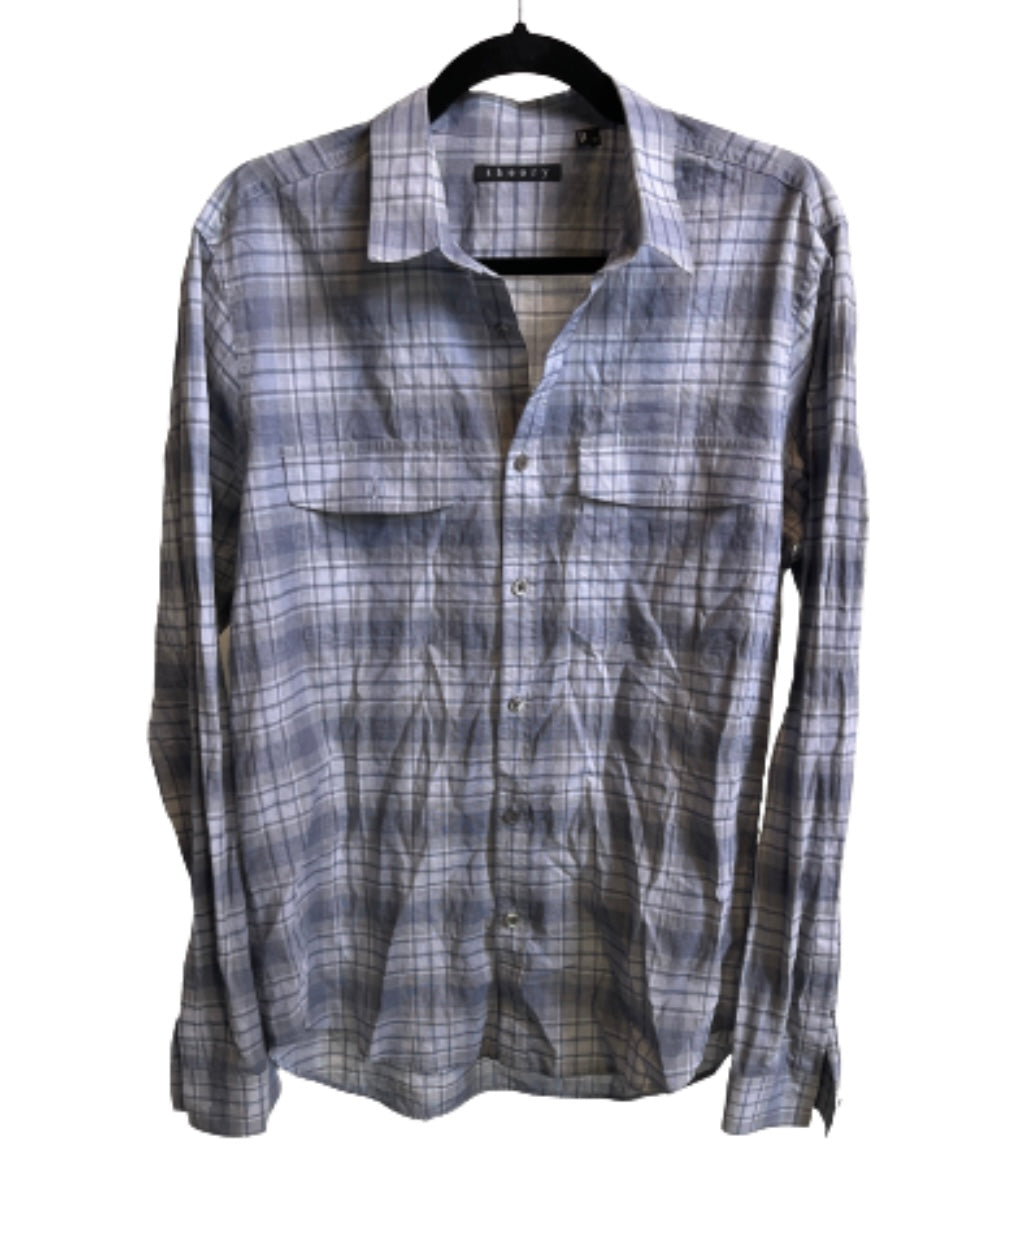 NEW GIRL: Schmidt's THEORY Brand Grey Plaid Long Sleeve Shirt (S)